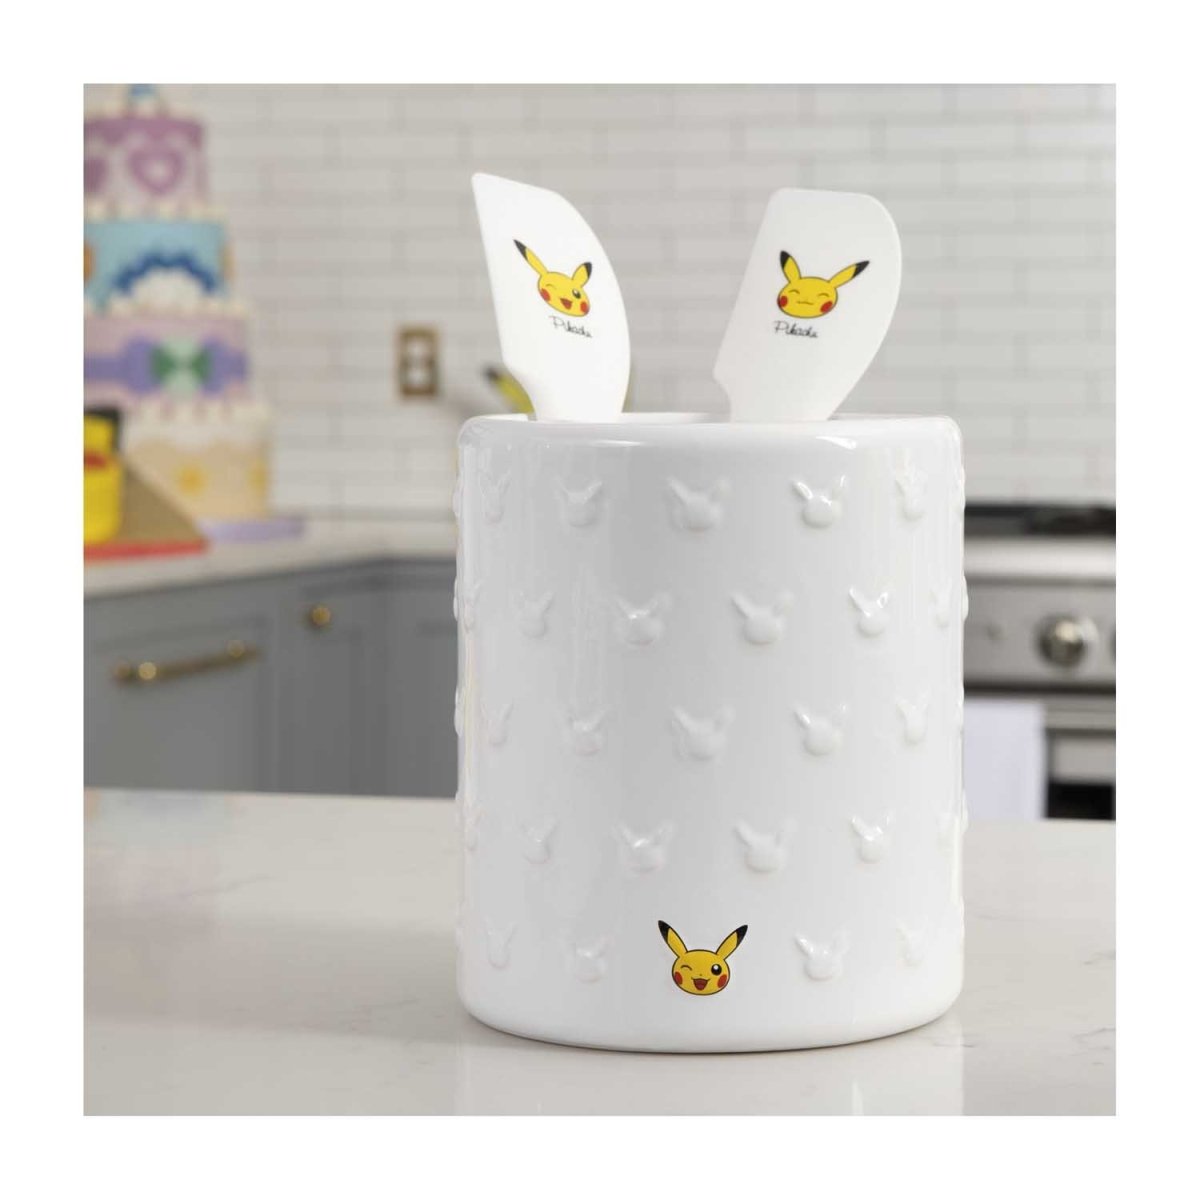 Pikachu Kitchen Ceramic Utensil Holder